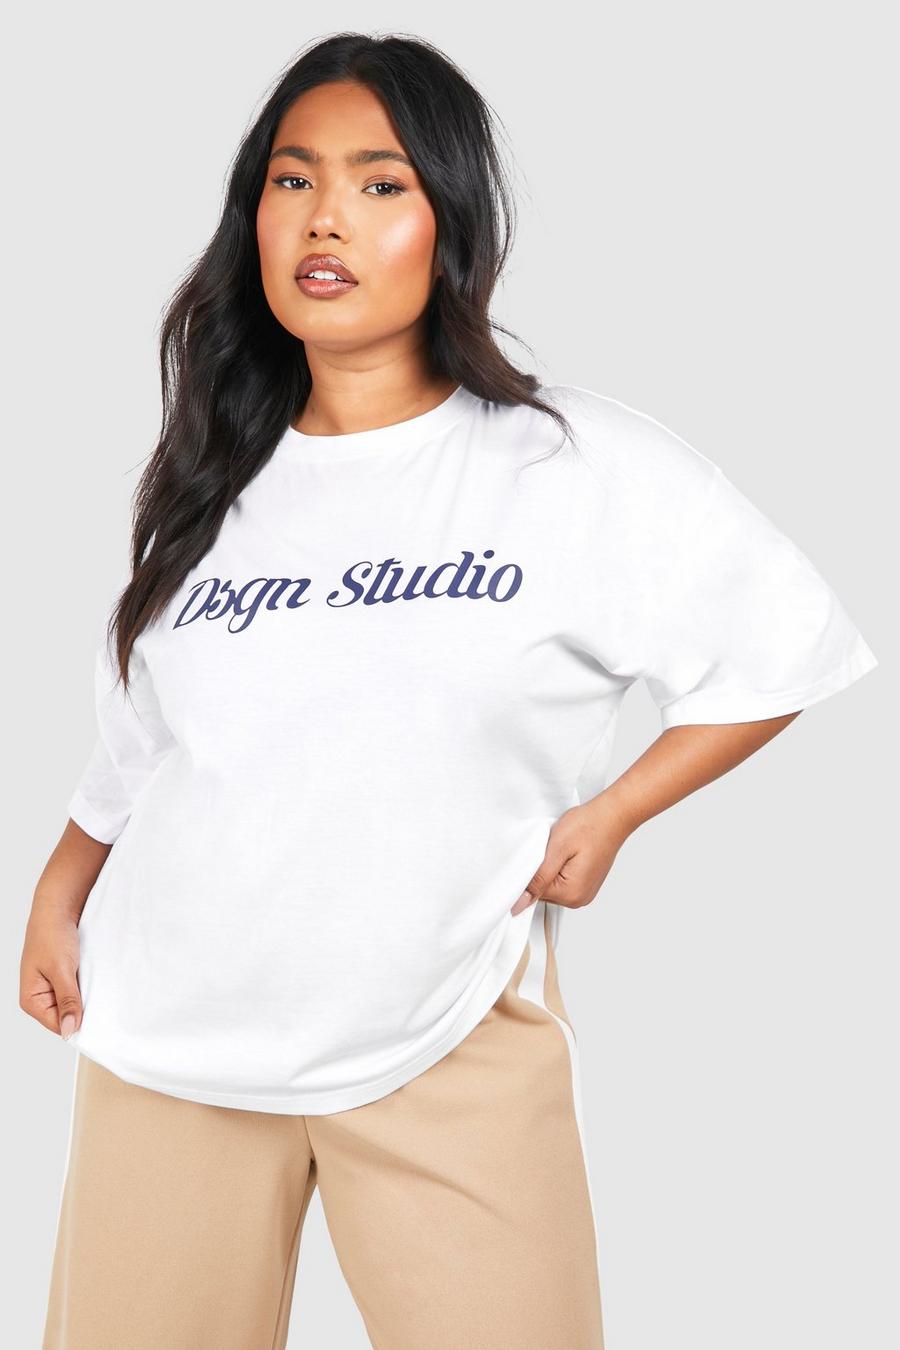 Plus Oversize T-Shirt mit Dsgn Studio Schriftzug, White image number 1